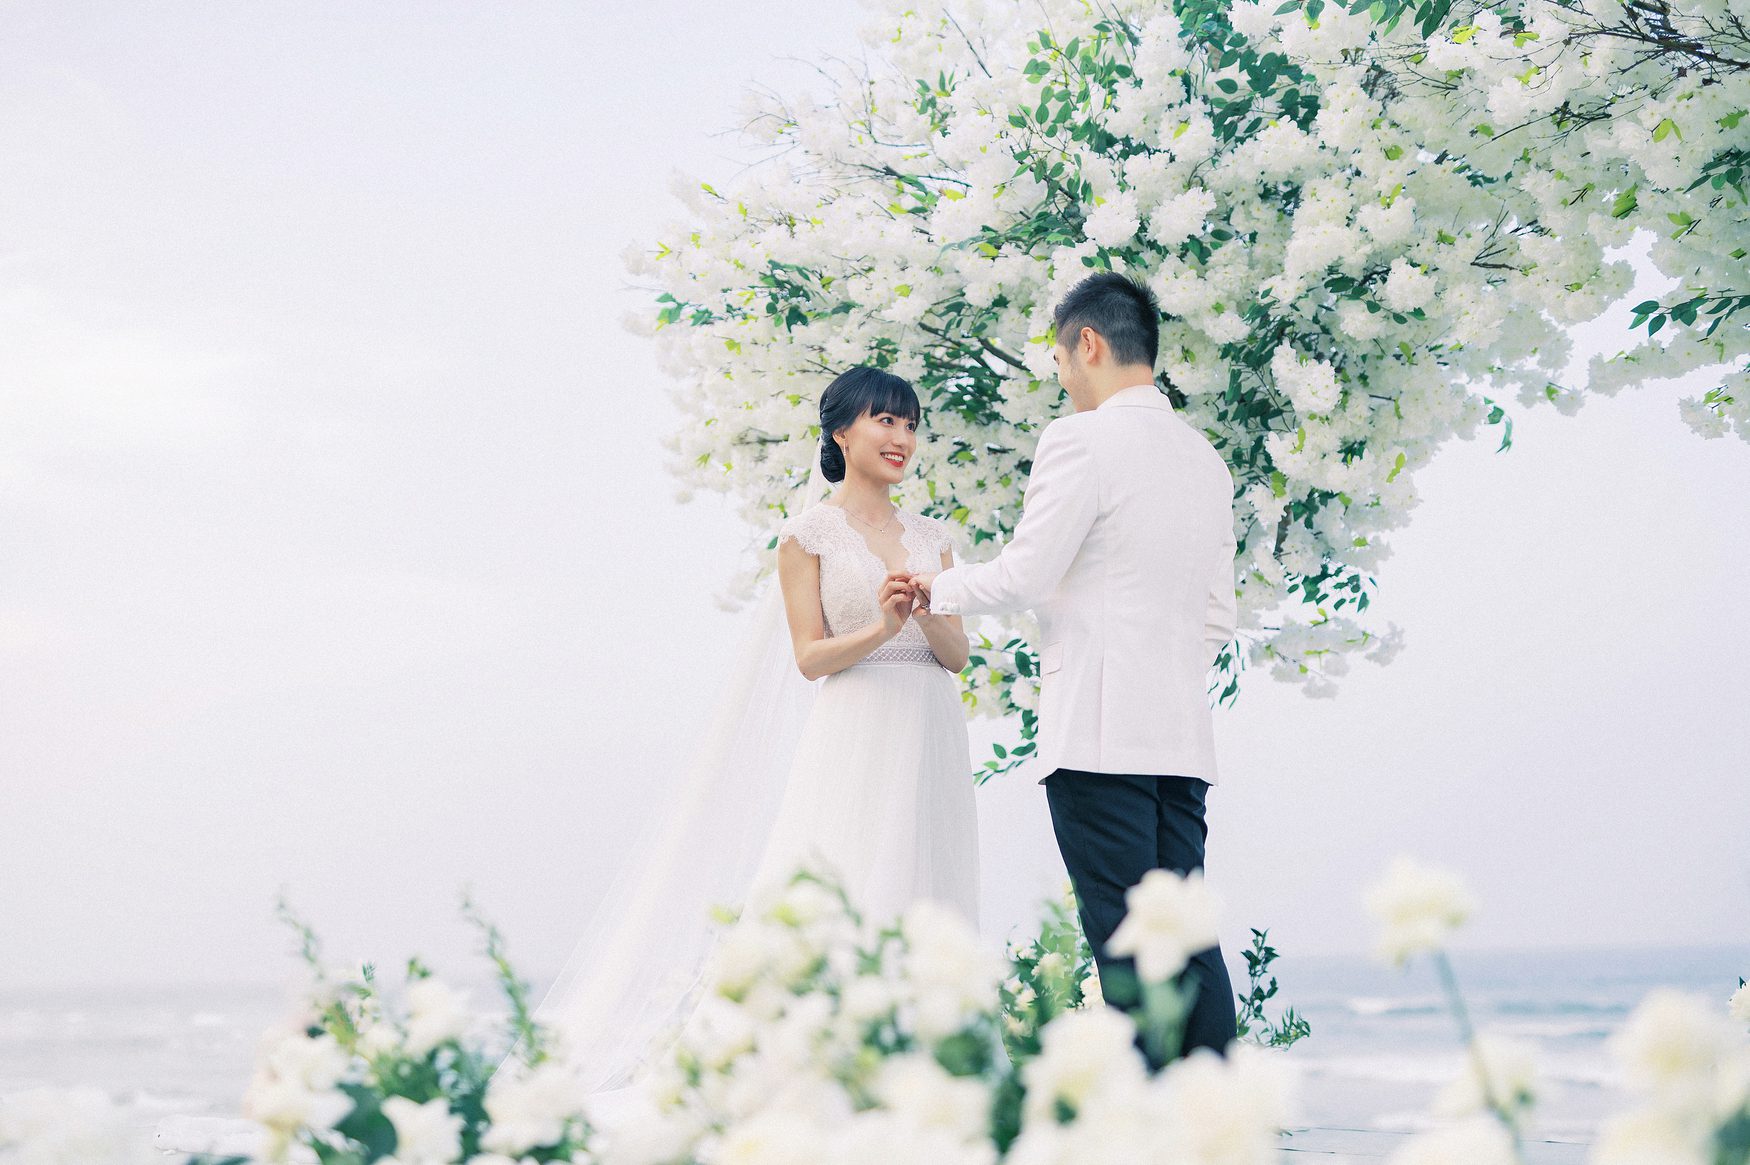 A breathtaking destination wedding in Danang